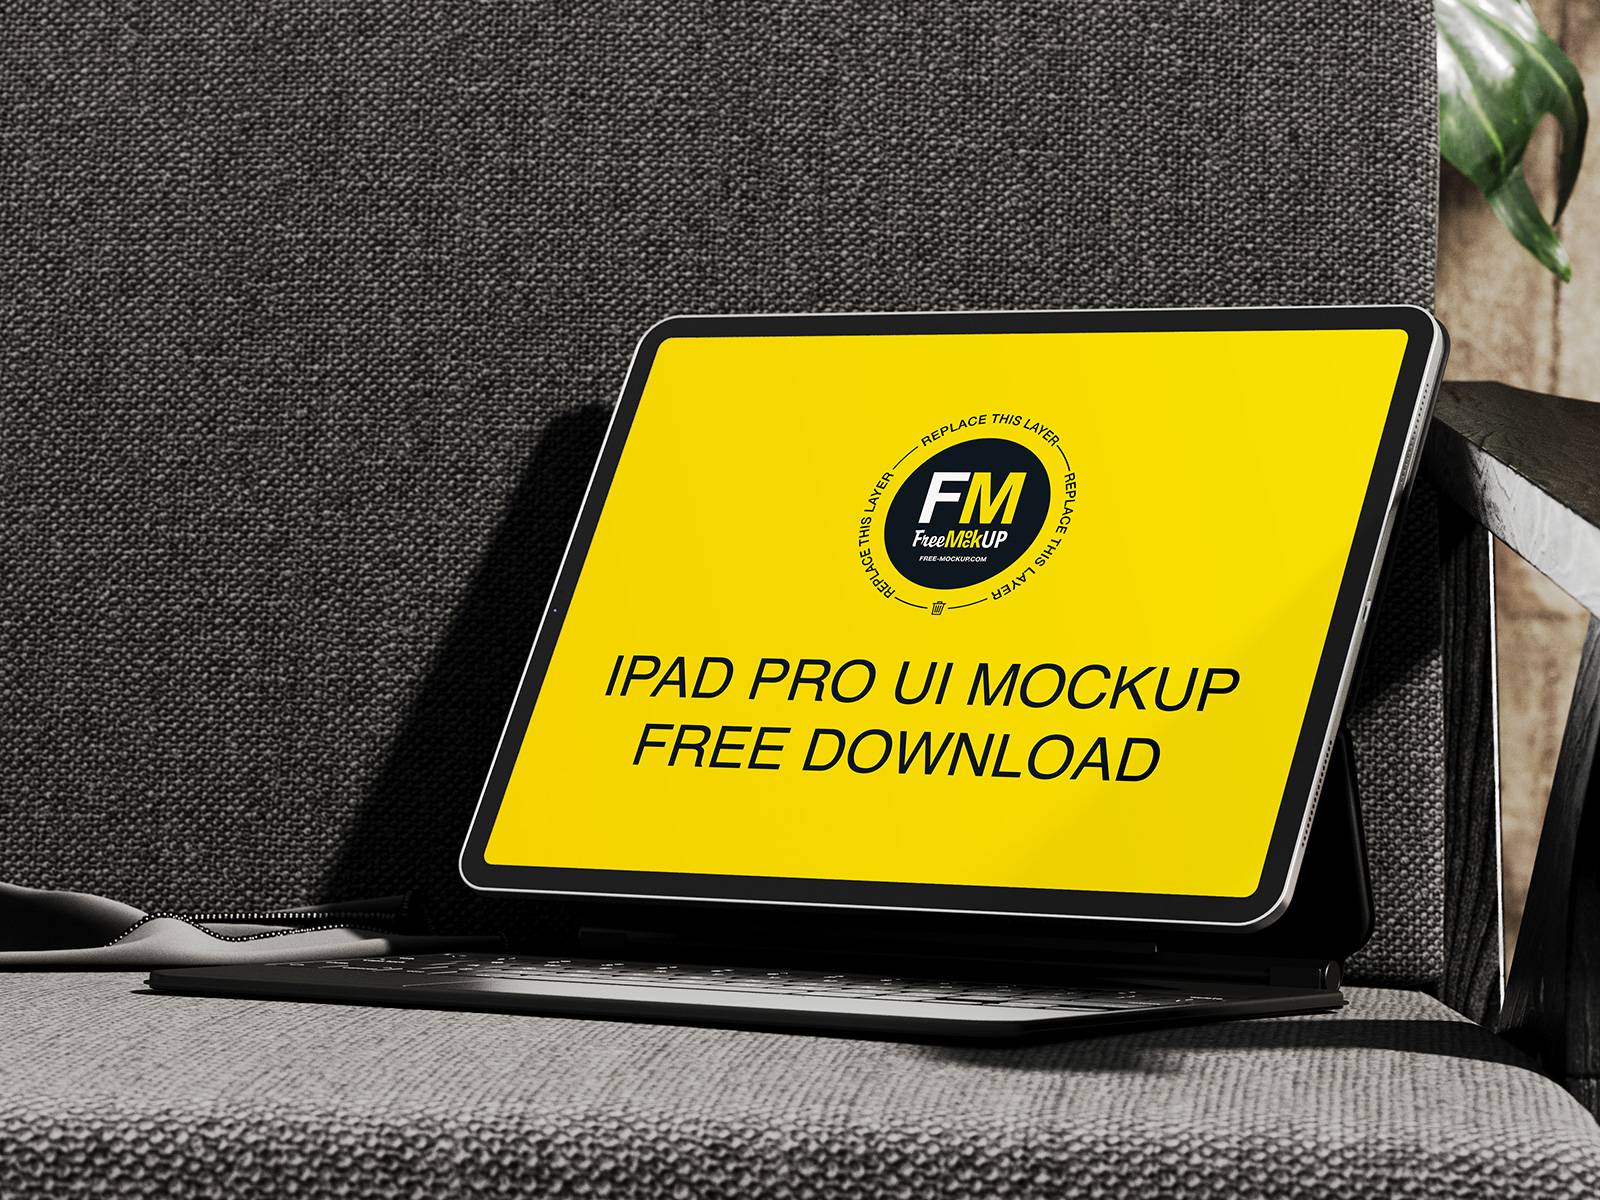 iPad Pro UI Mockup Free Download